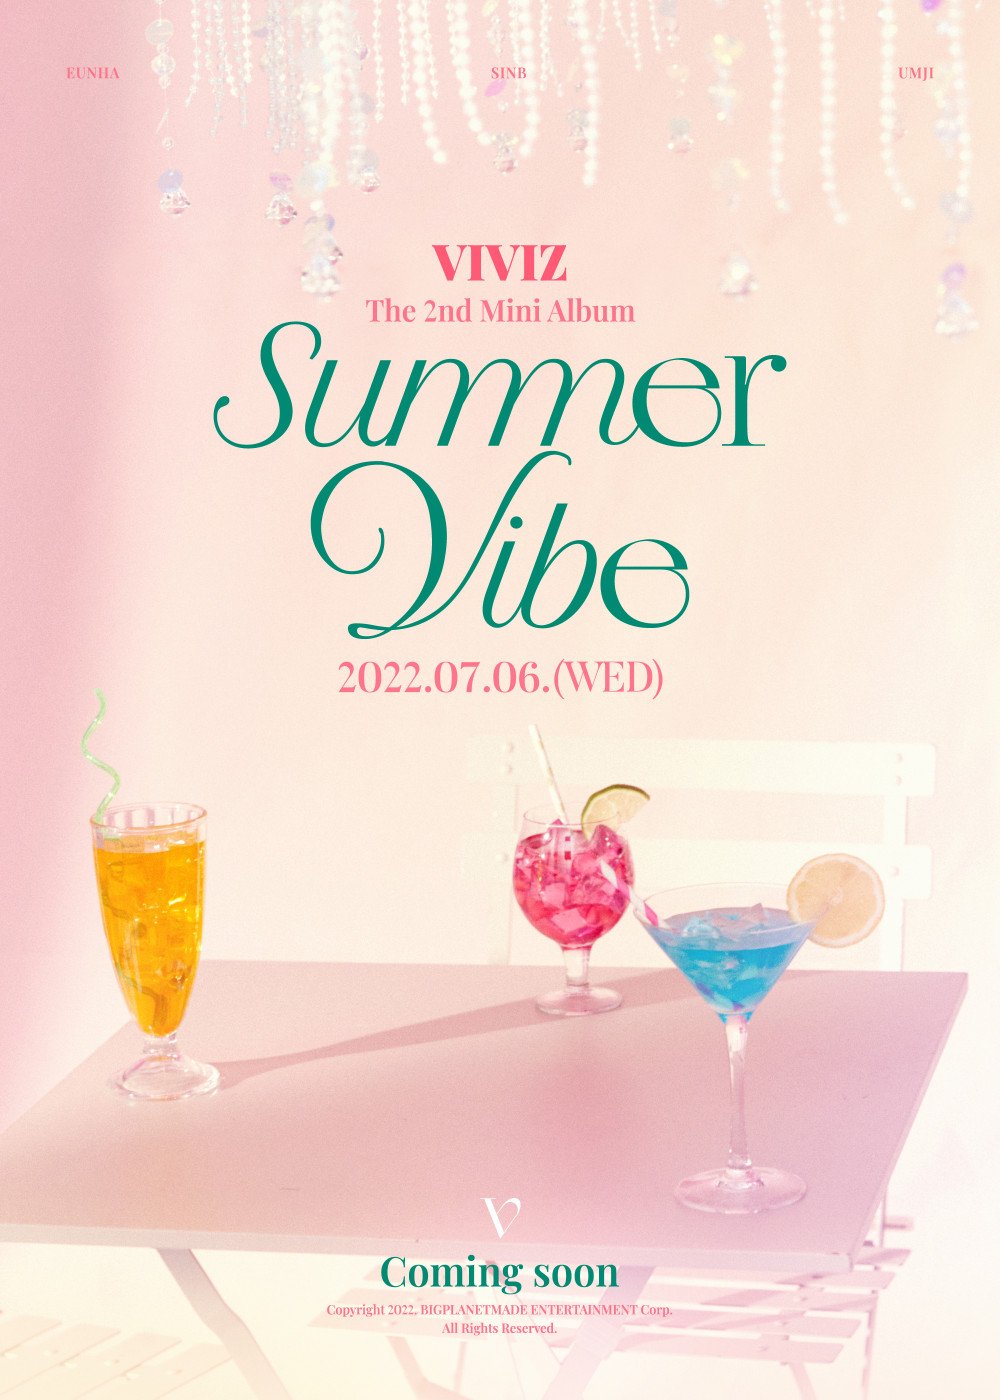 VIVIZ to make their first comeback with a new album next month | allkpop